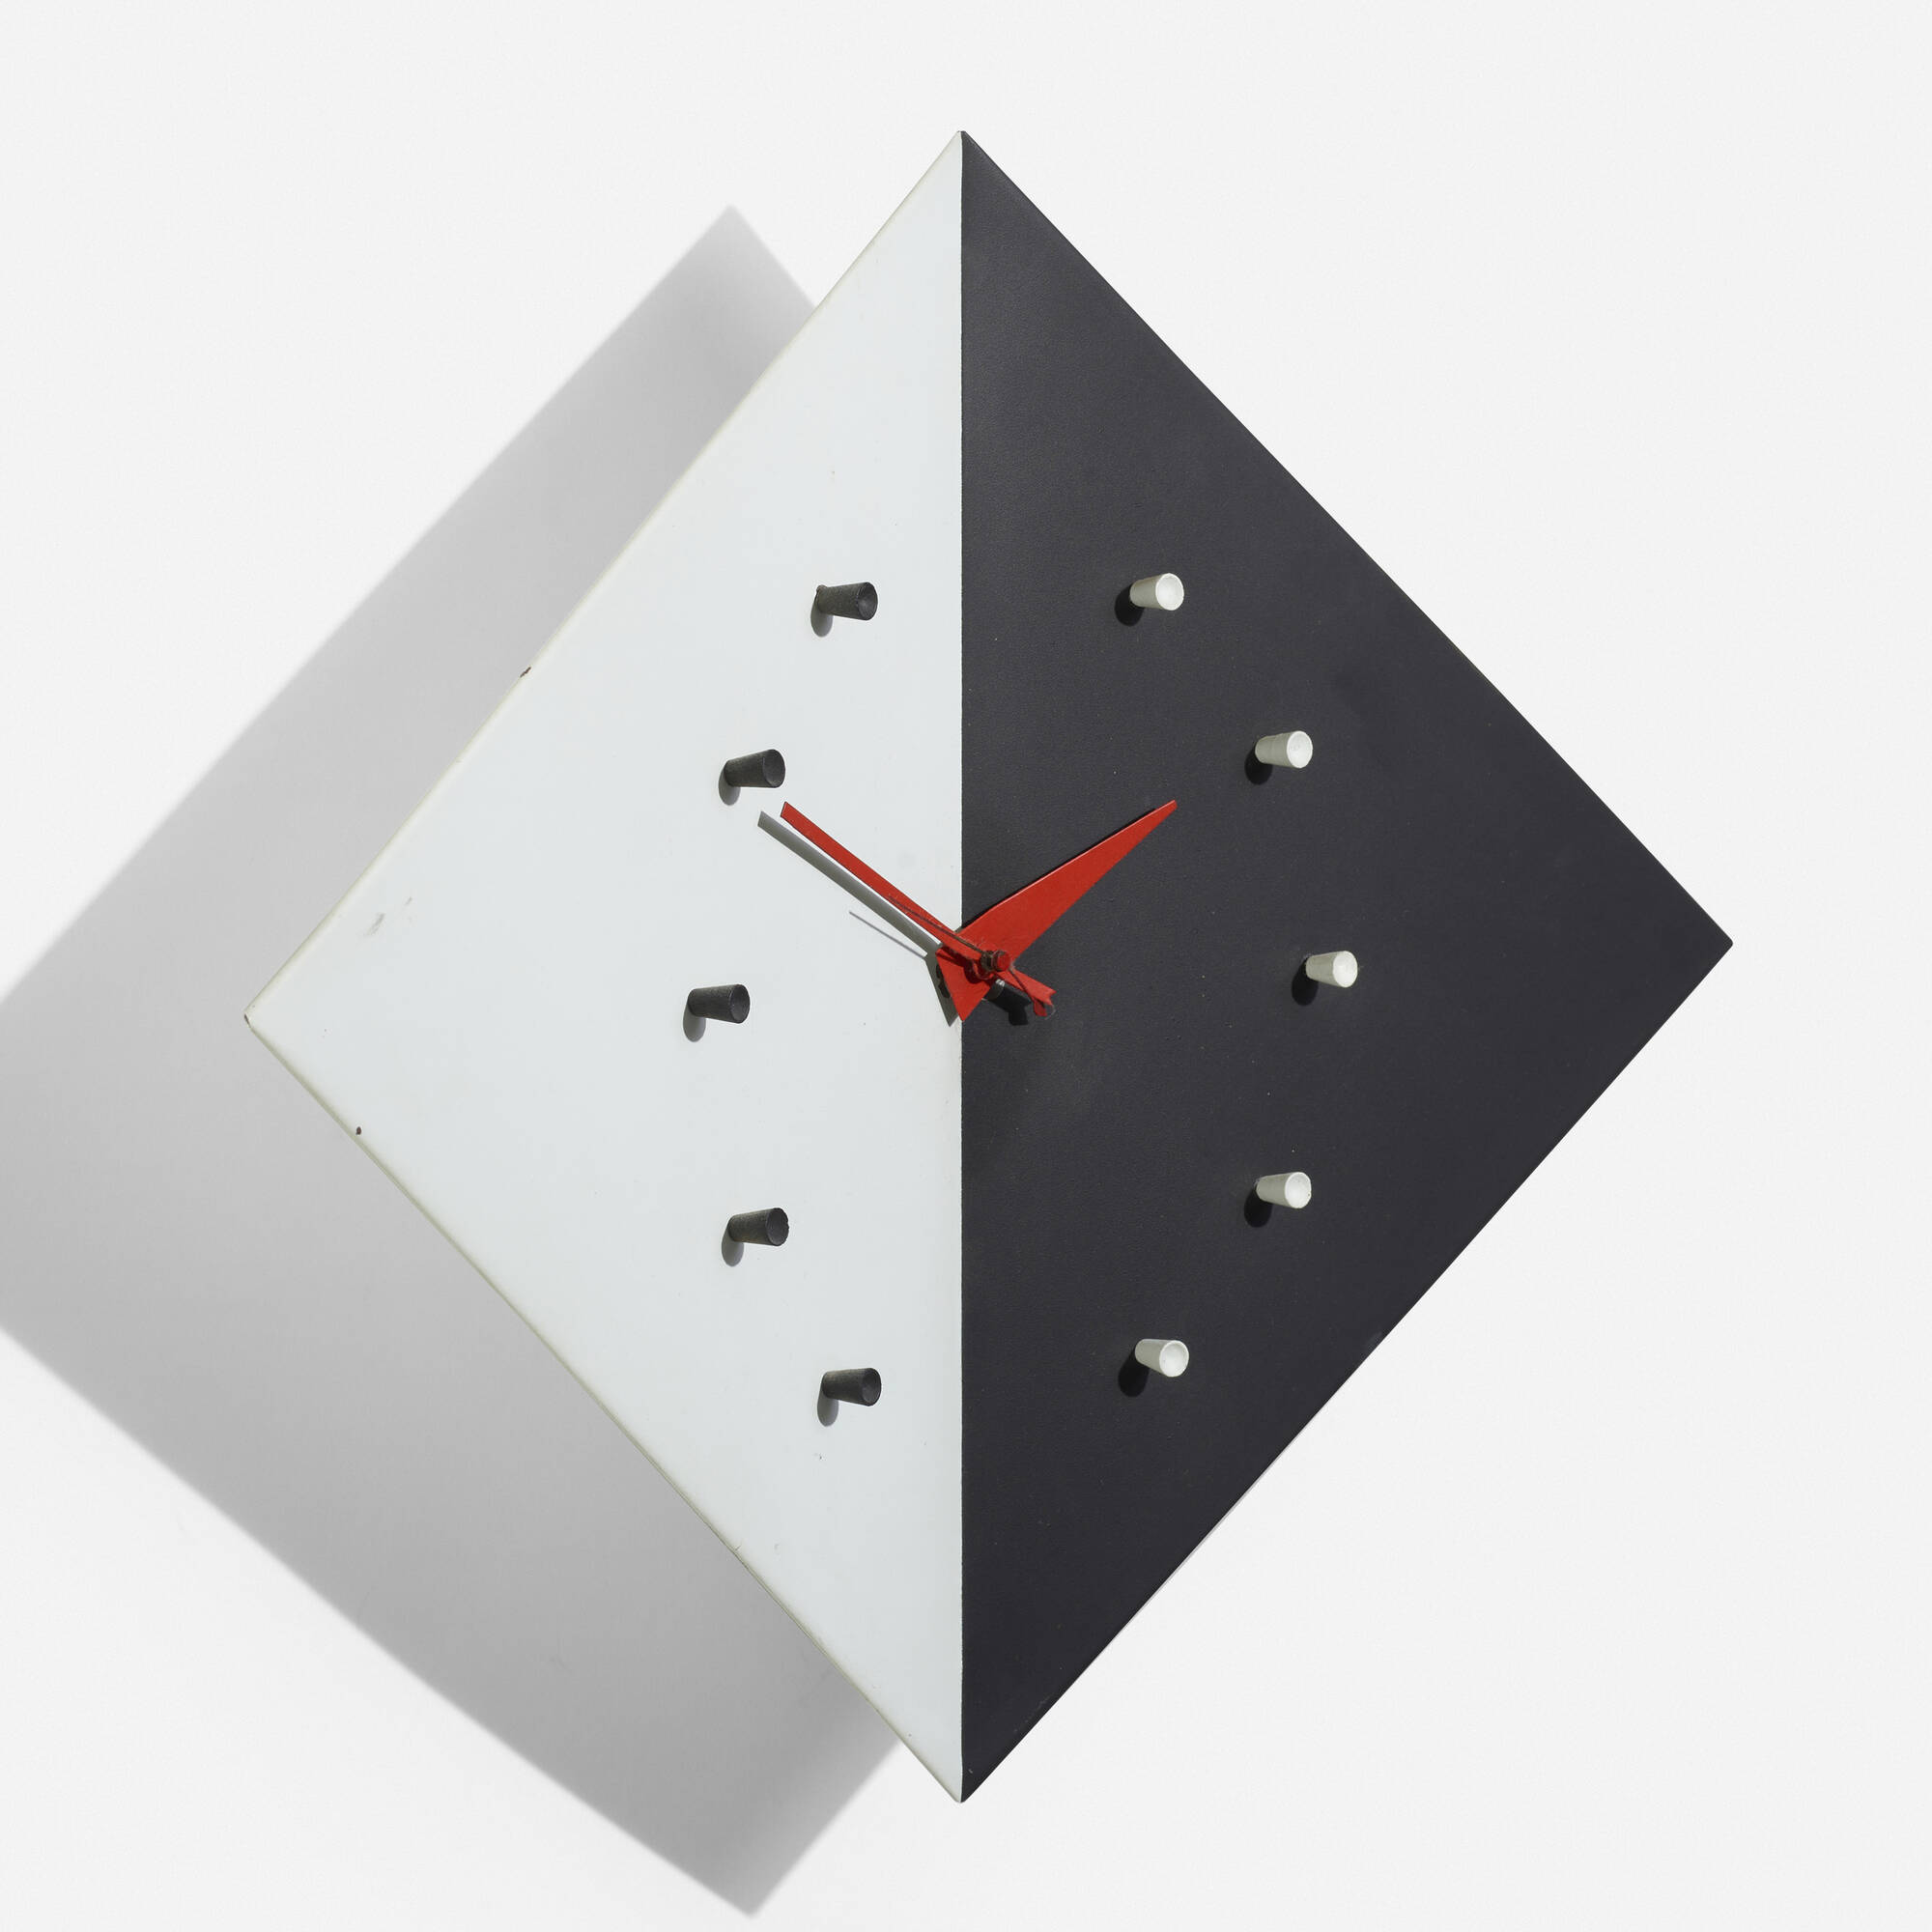 152: GEORGE NELSON & ASSOCIATES, Kite wall clock, model 2201D